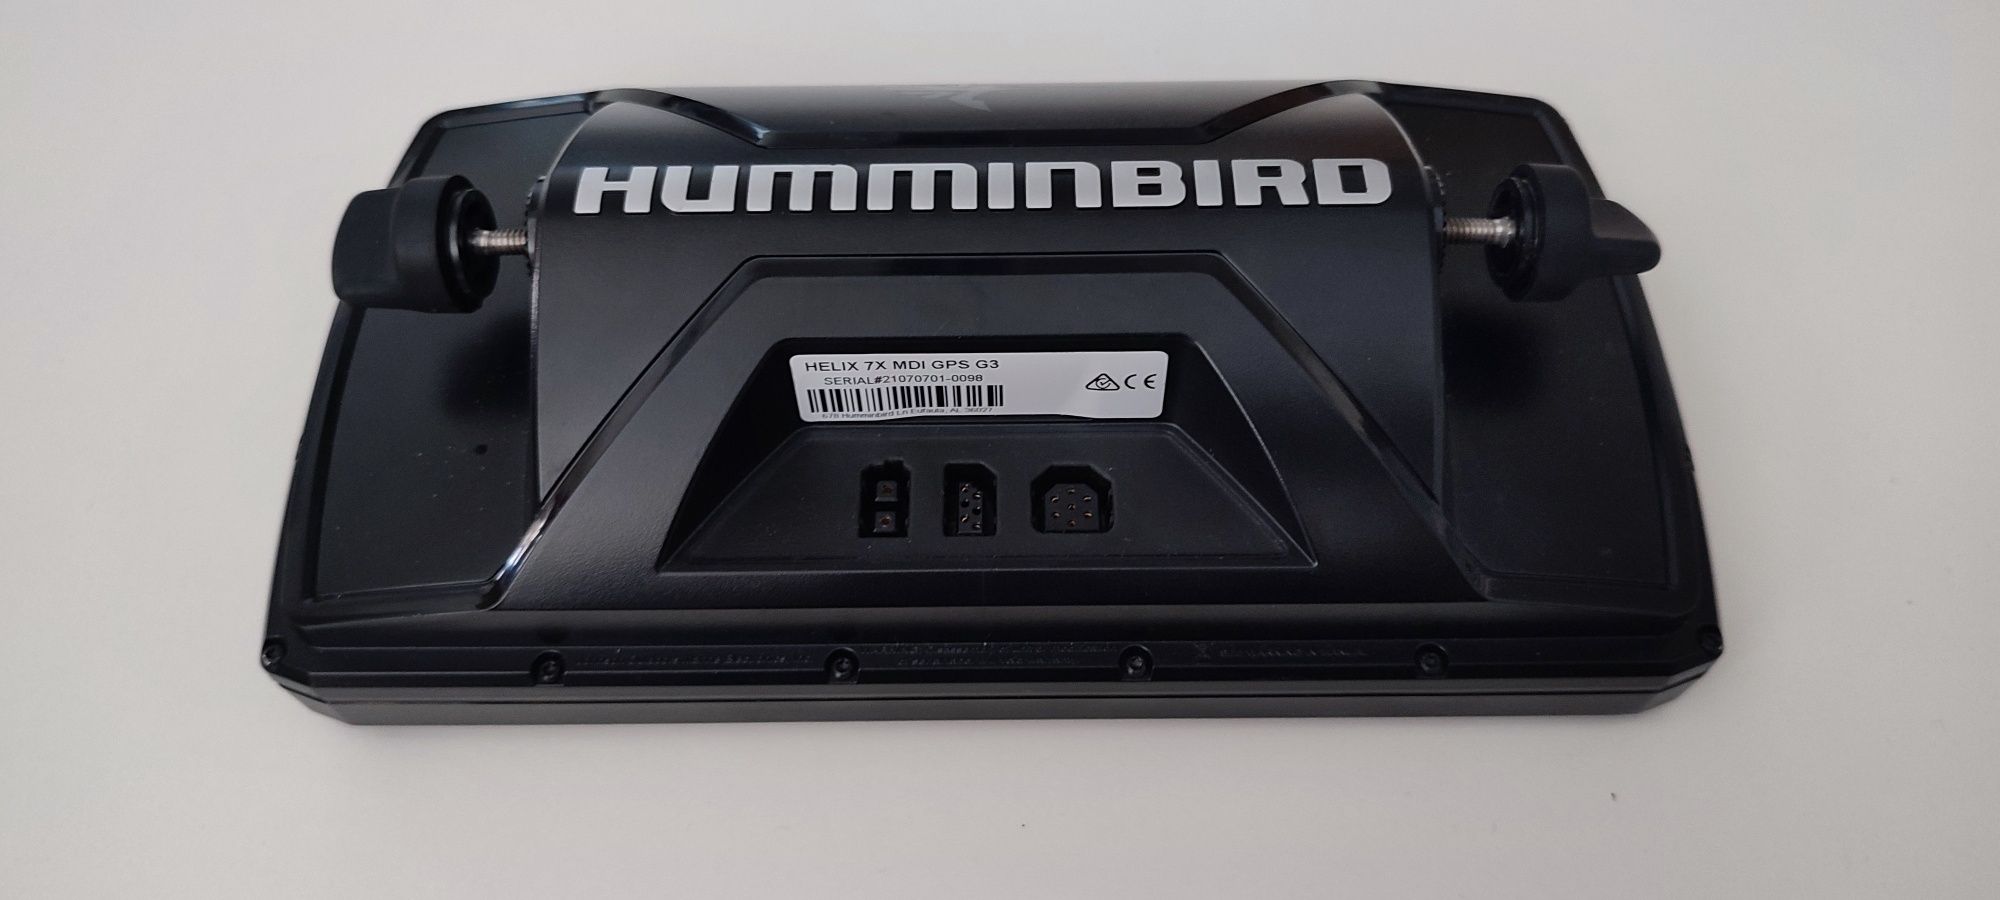 Sonda Humminbird Helix 7x GPS MDI G3